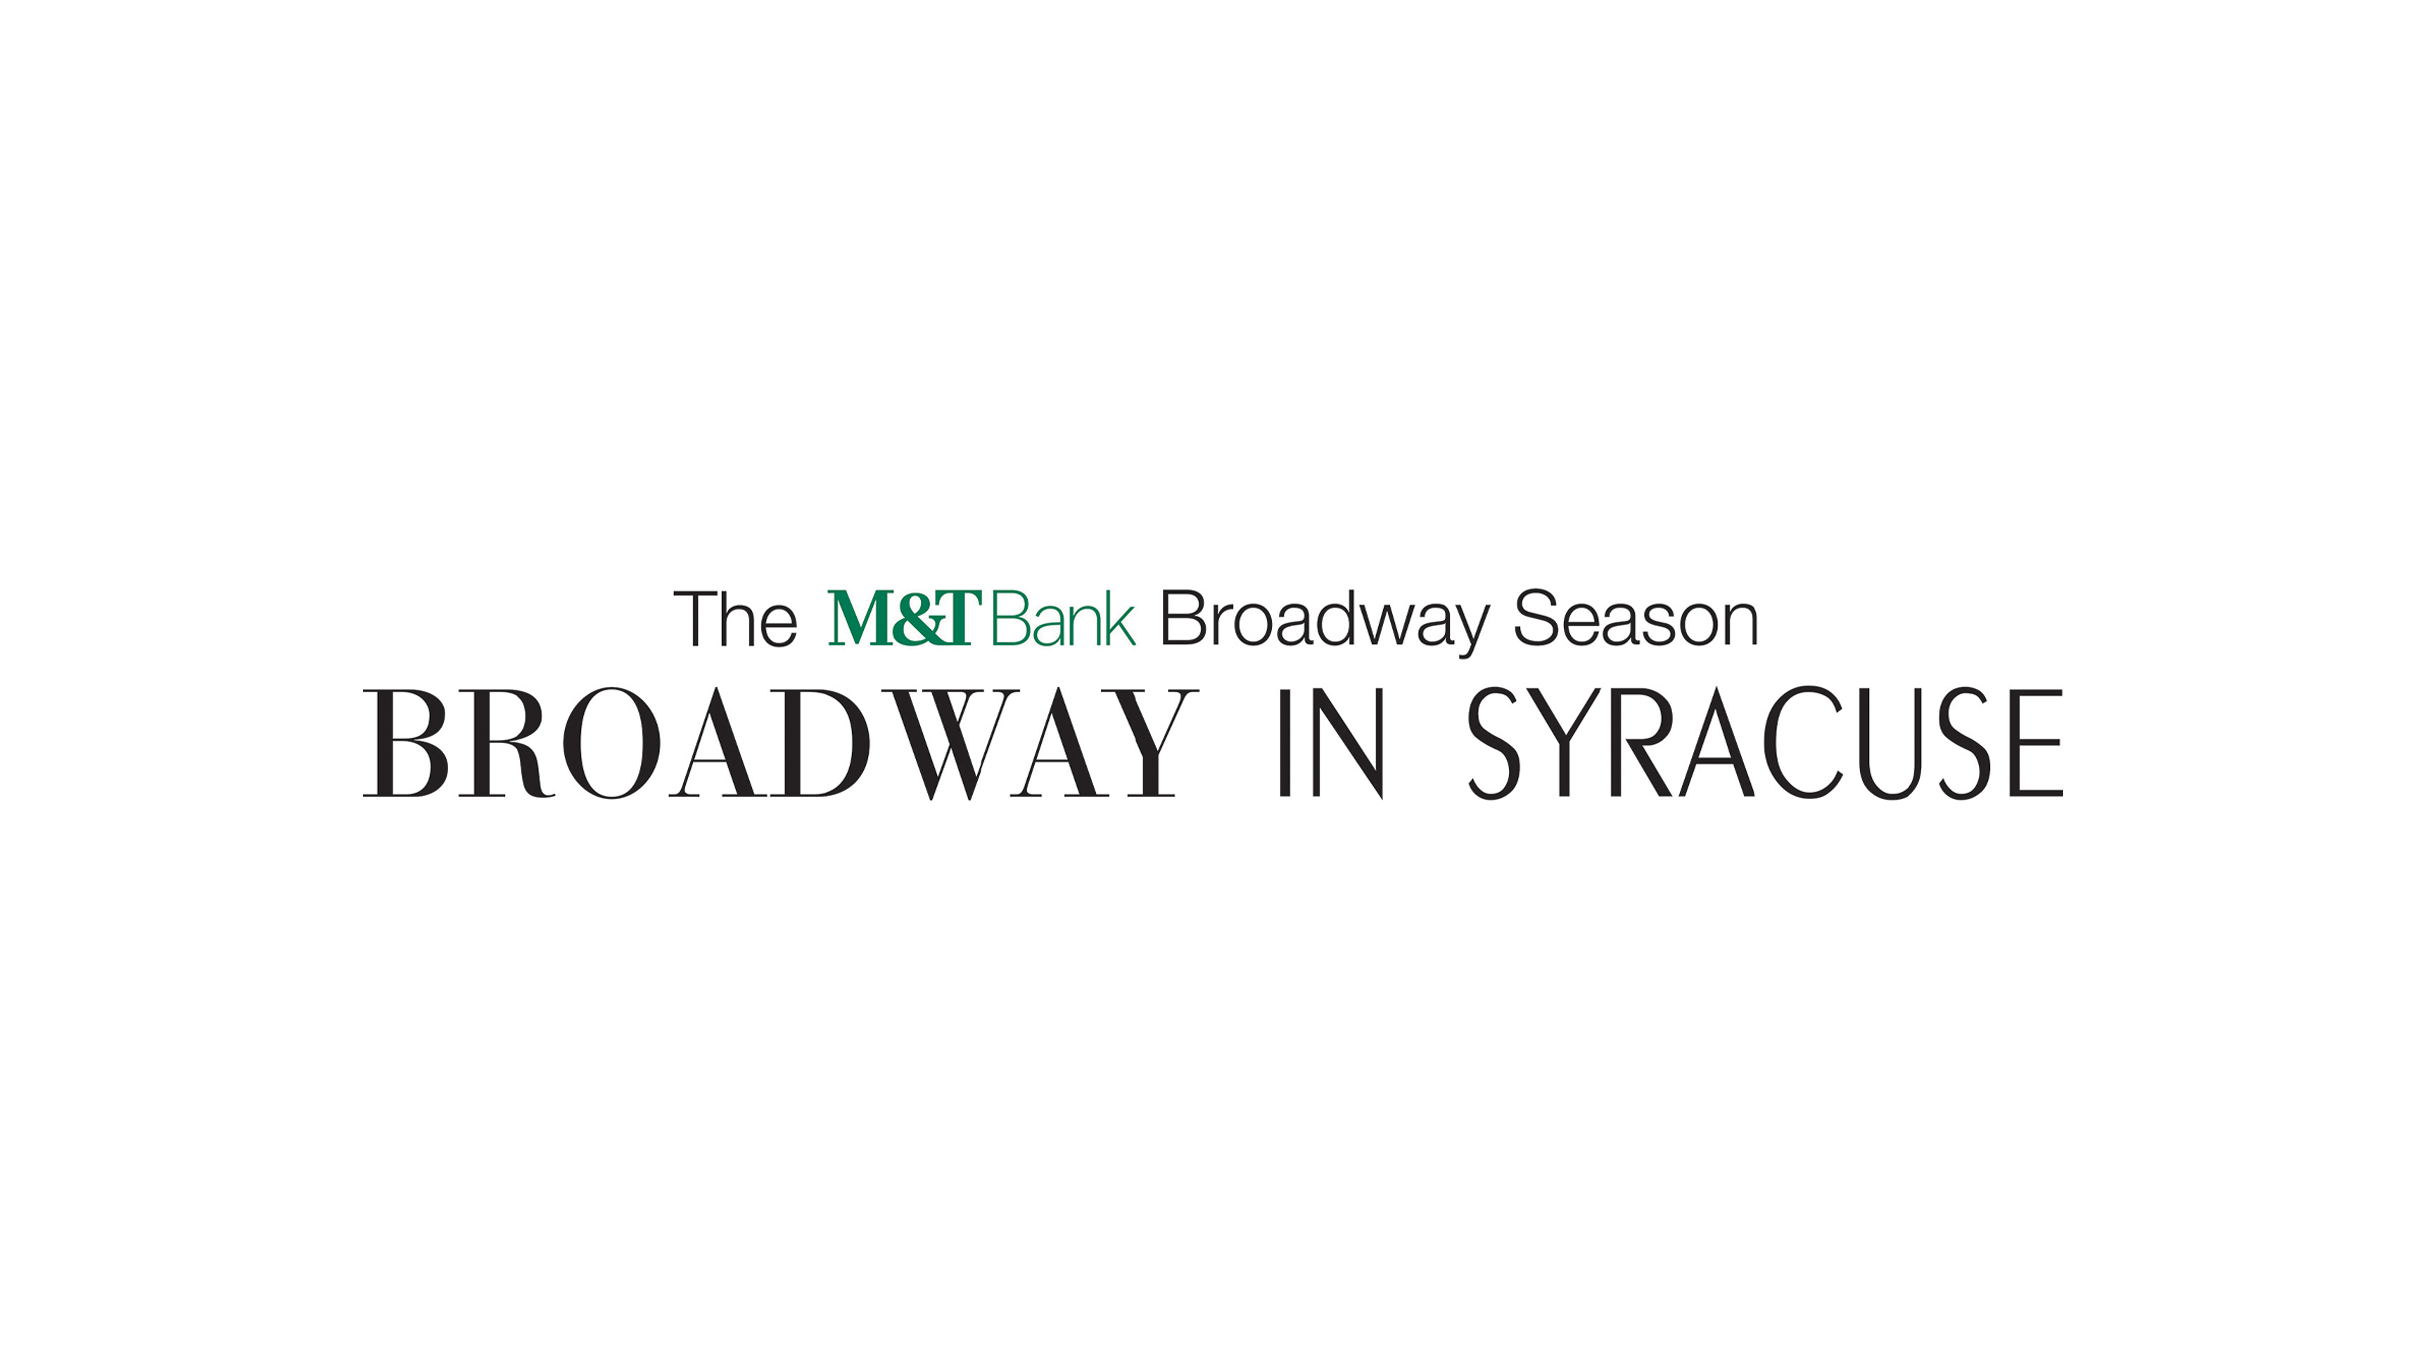 Broadway In Syracuse Season Tickets: Series E